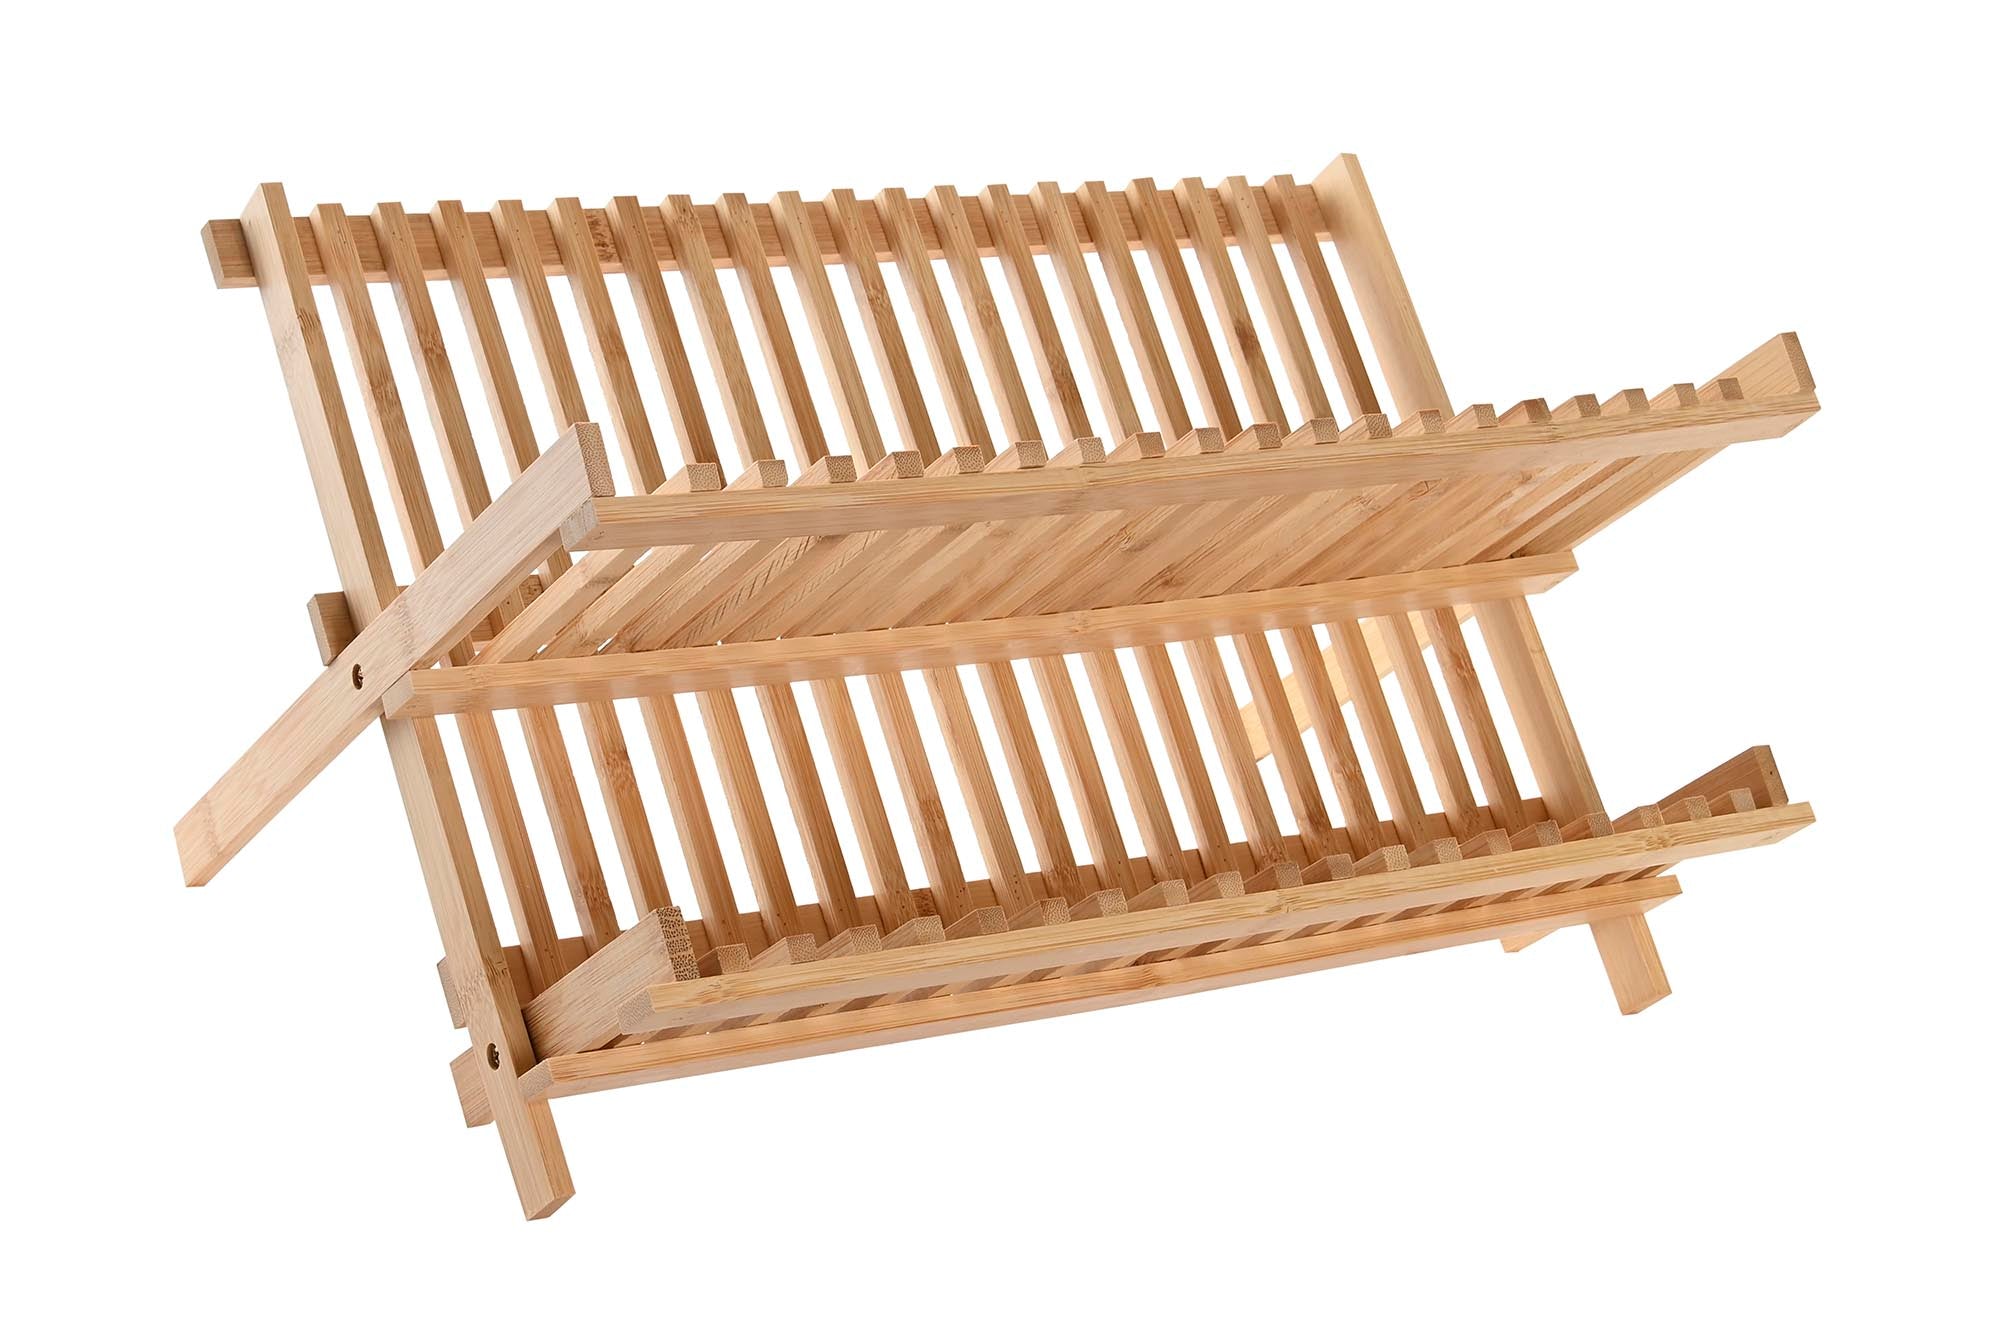 Dish rack in Natural Bamboo